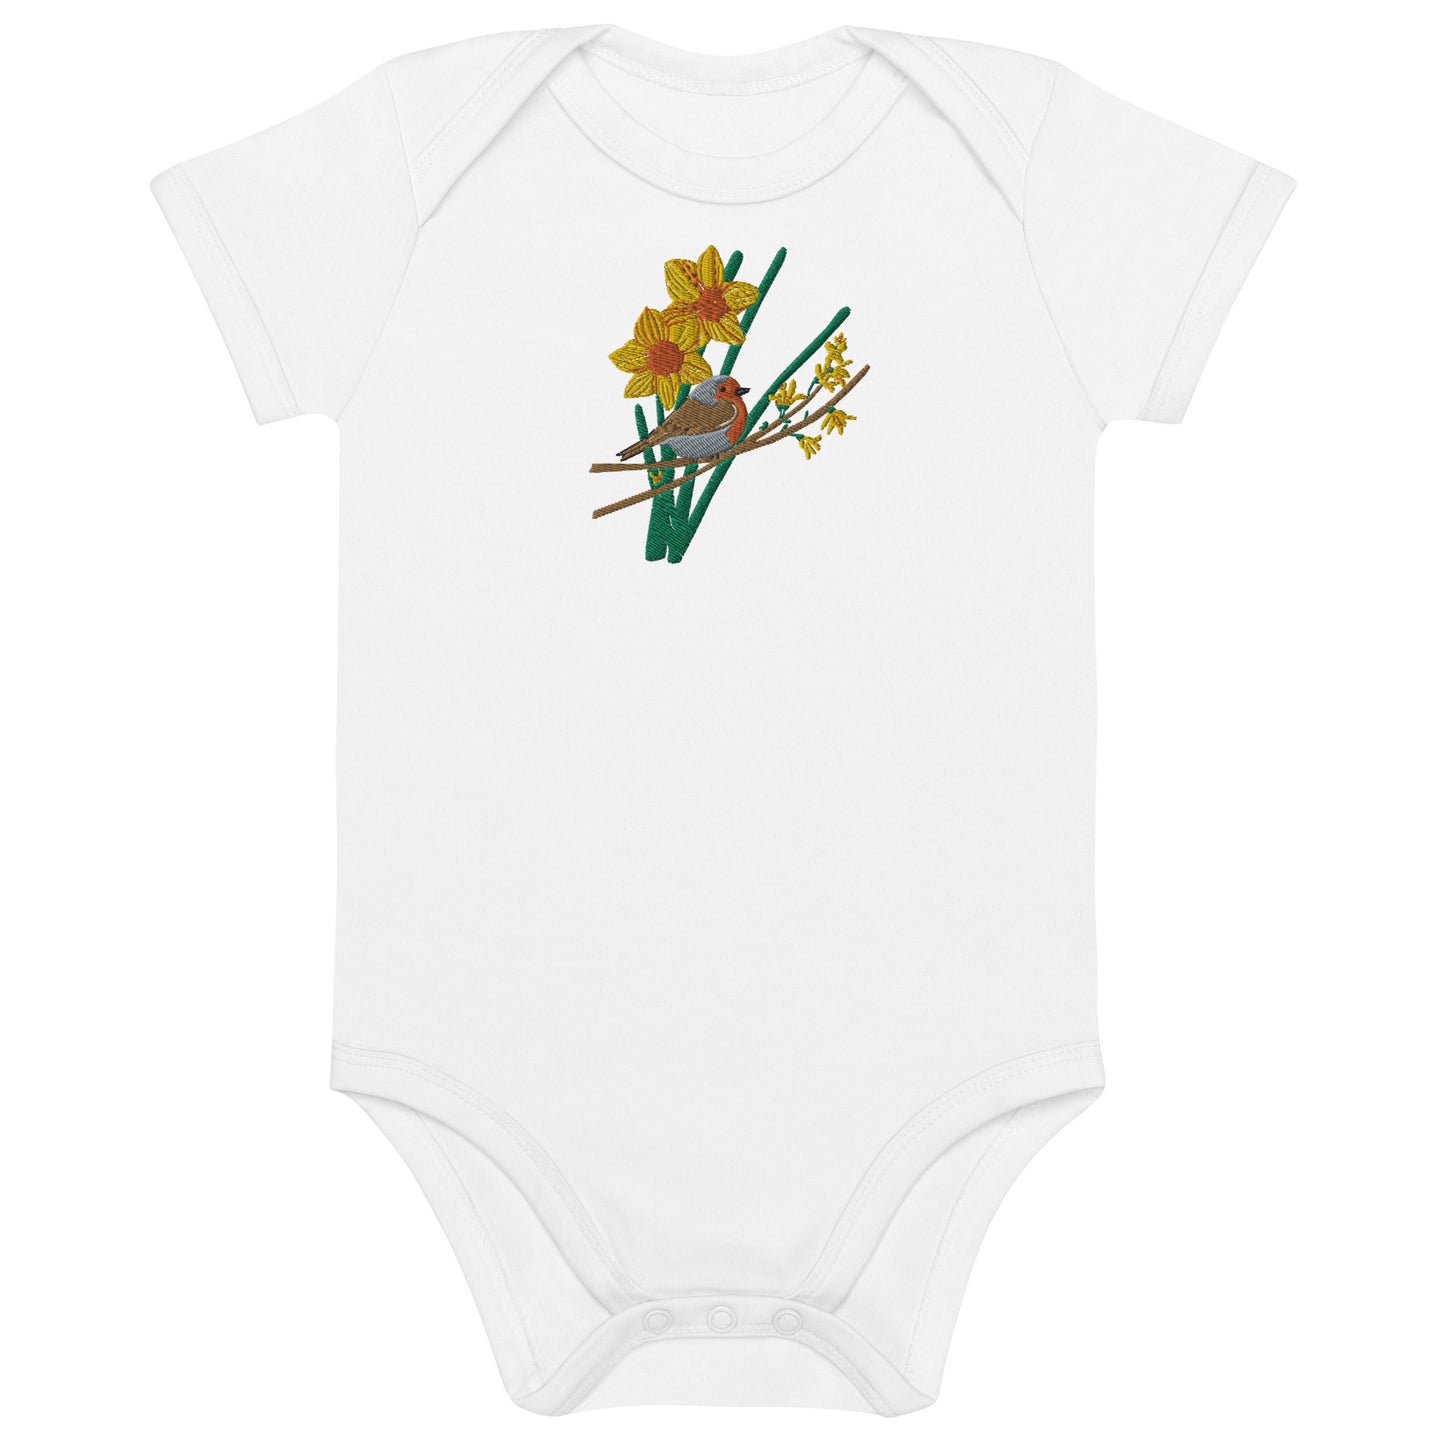 Robin and Daffodils Organic cotton baby bodysuit